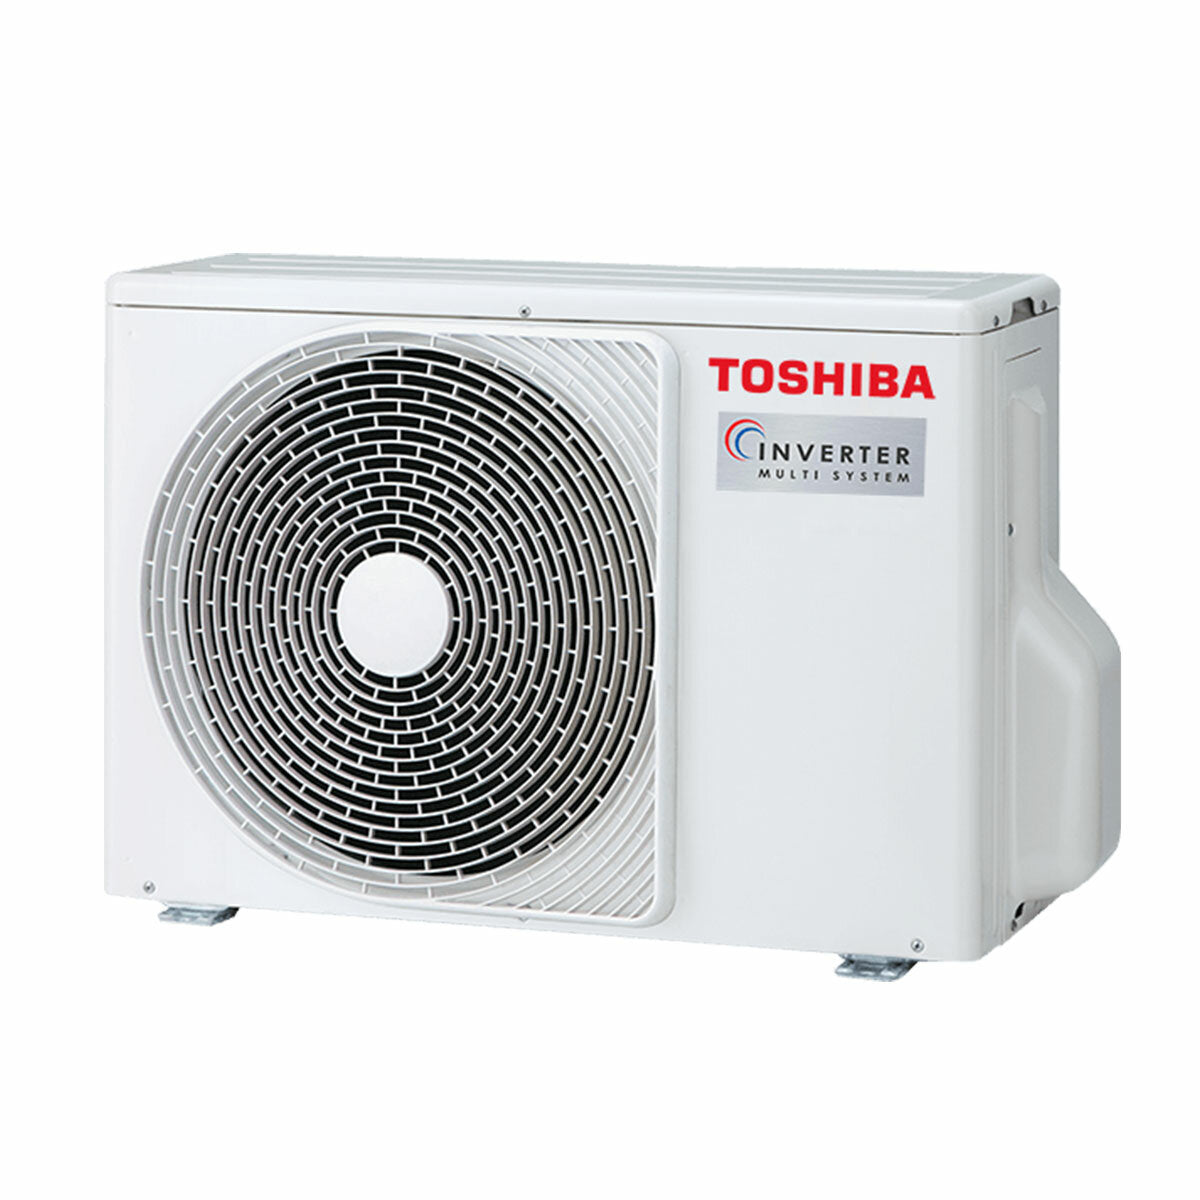 Toshiba ducted air conditioner U2 trial split 7000+9000+16000 BTU inverter A+++ external unit 7 kW